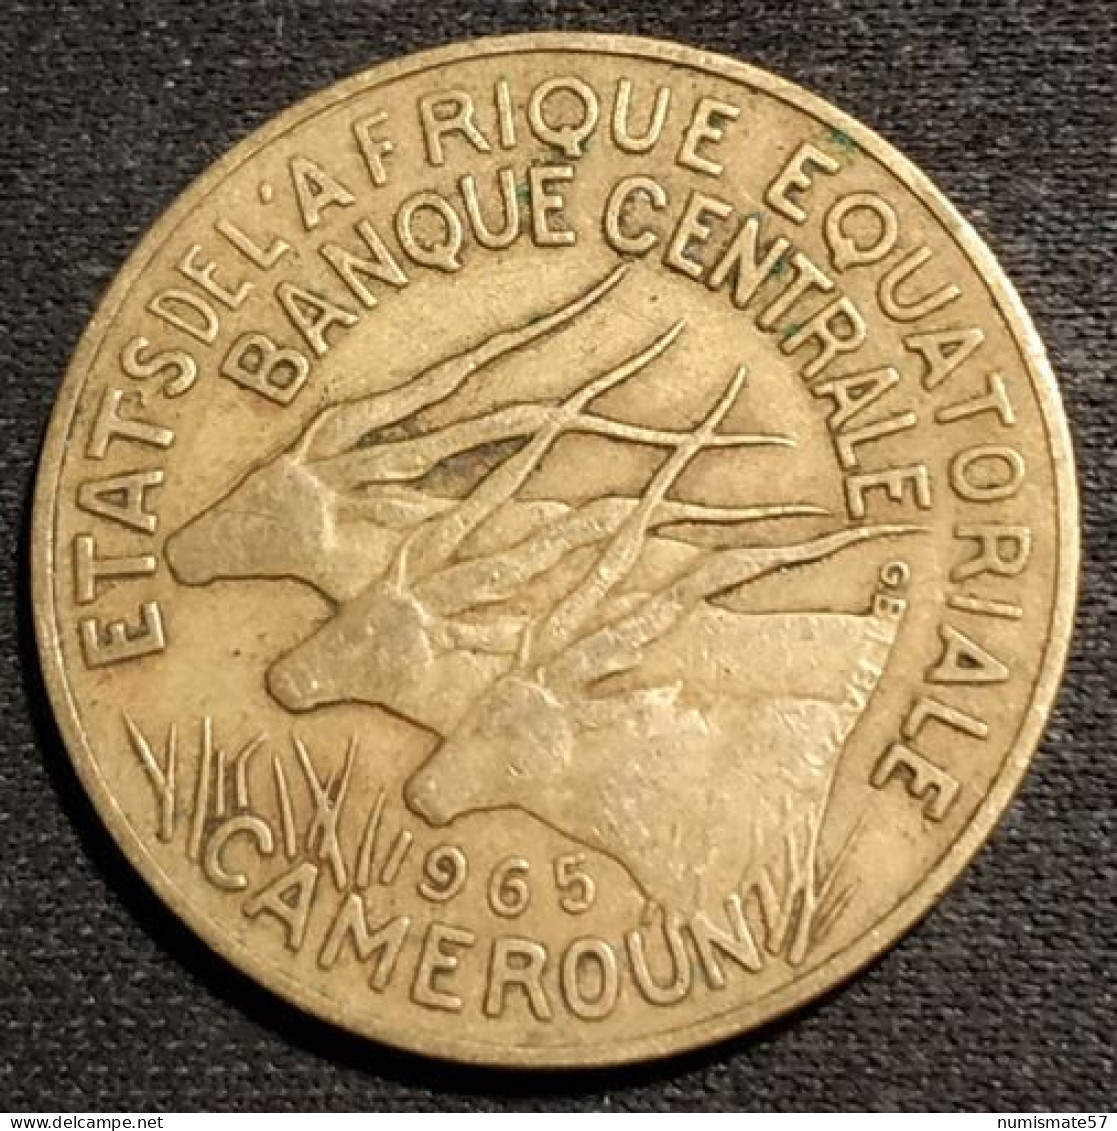 CAMEROUN - ETATS DE L'AFRIQUE EQUATORIALE - 10 FRANCS 1965 - KM 2a - Kamerun